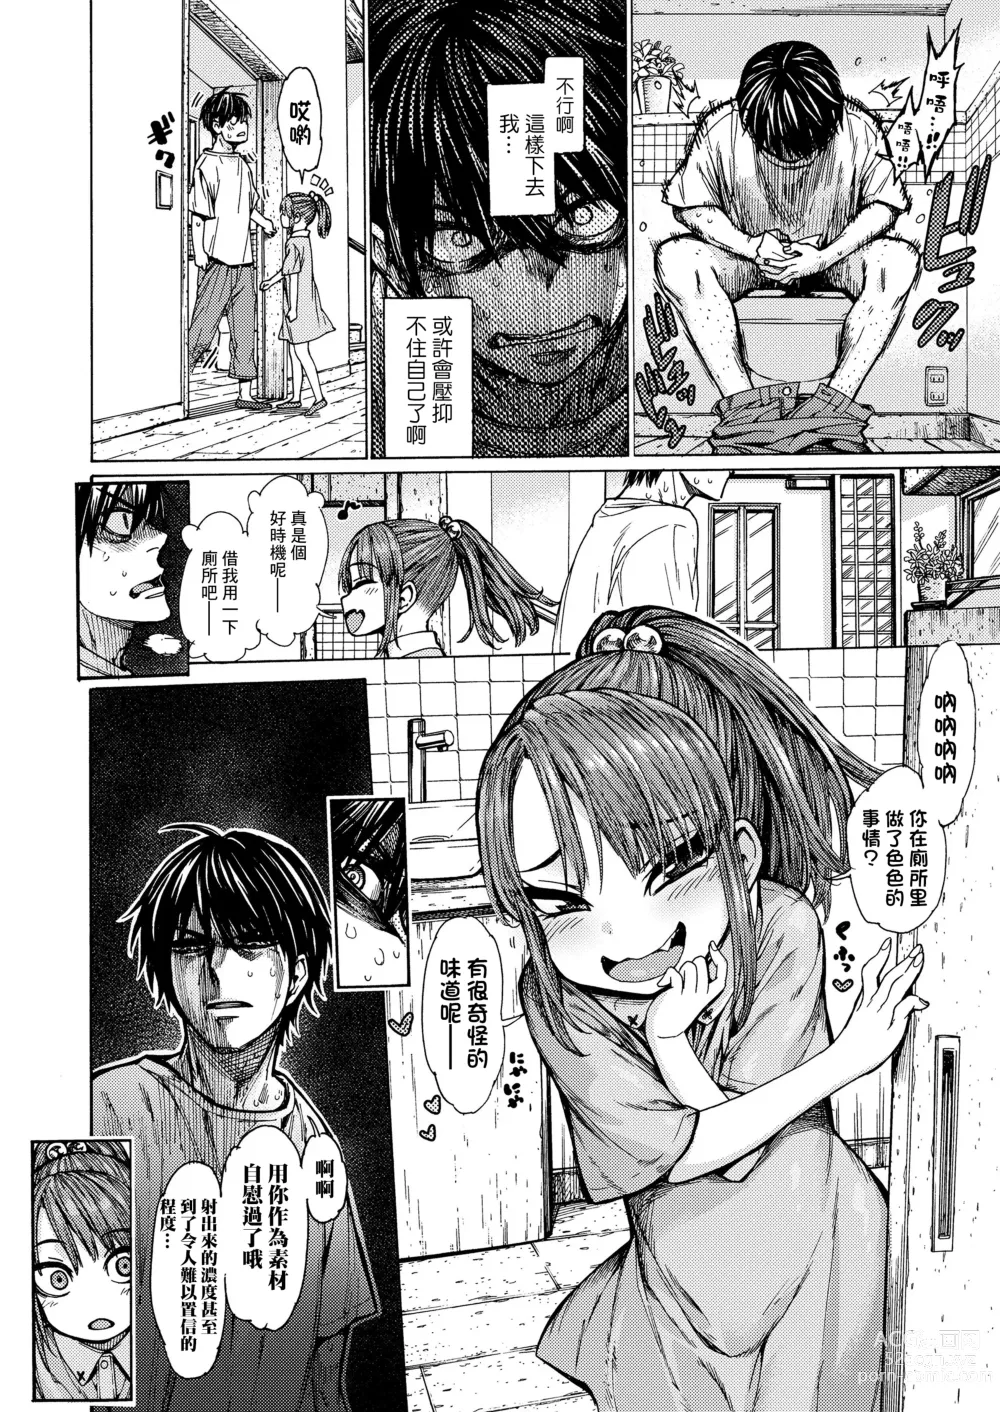 Page 6 of manga Kyou no Pantsu!